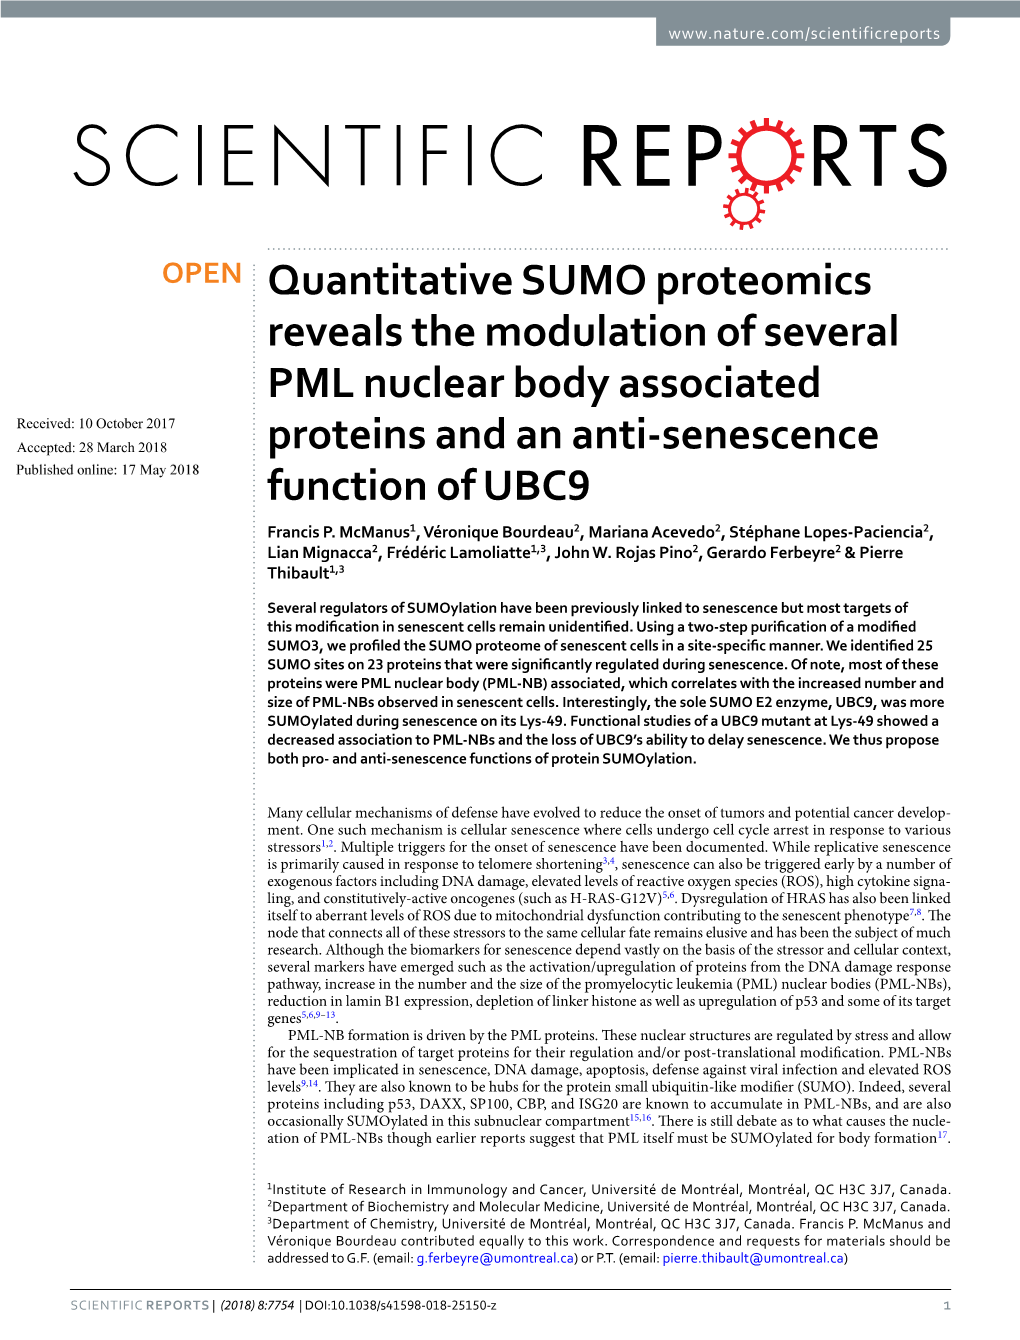 Quantitative SUMO Proteomics Reveals the Modulation of Several